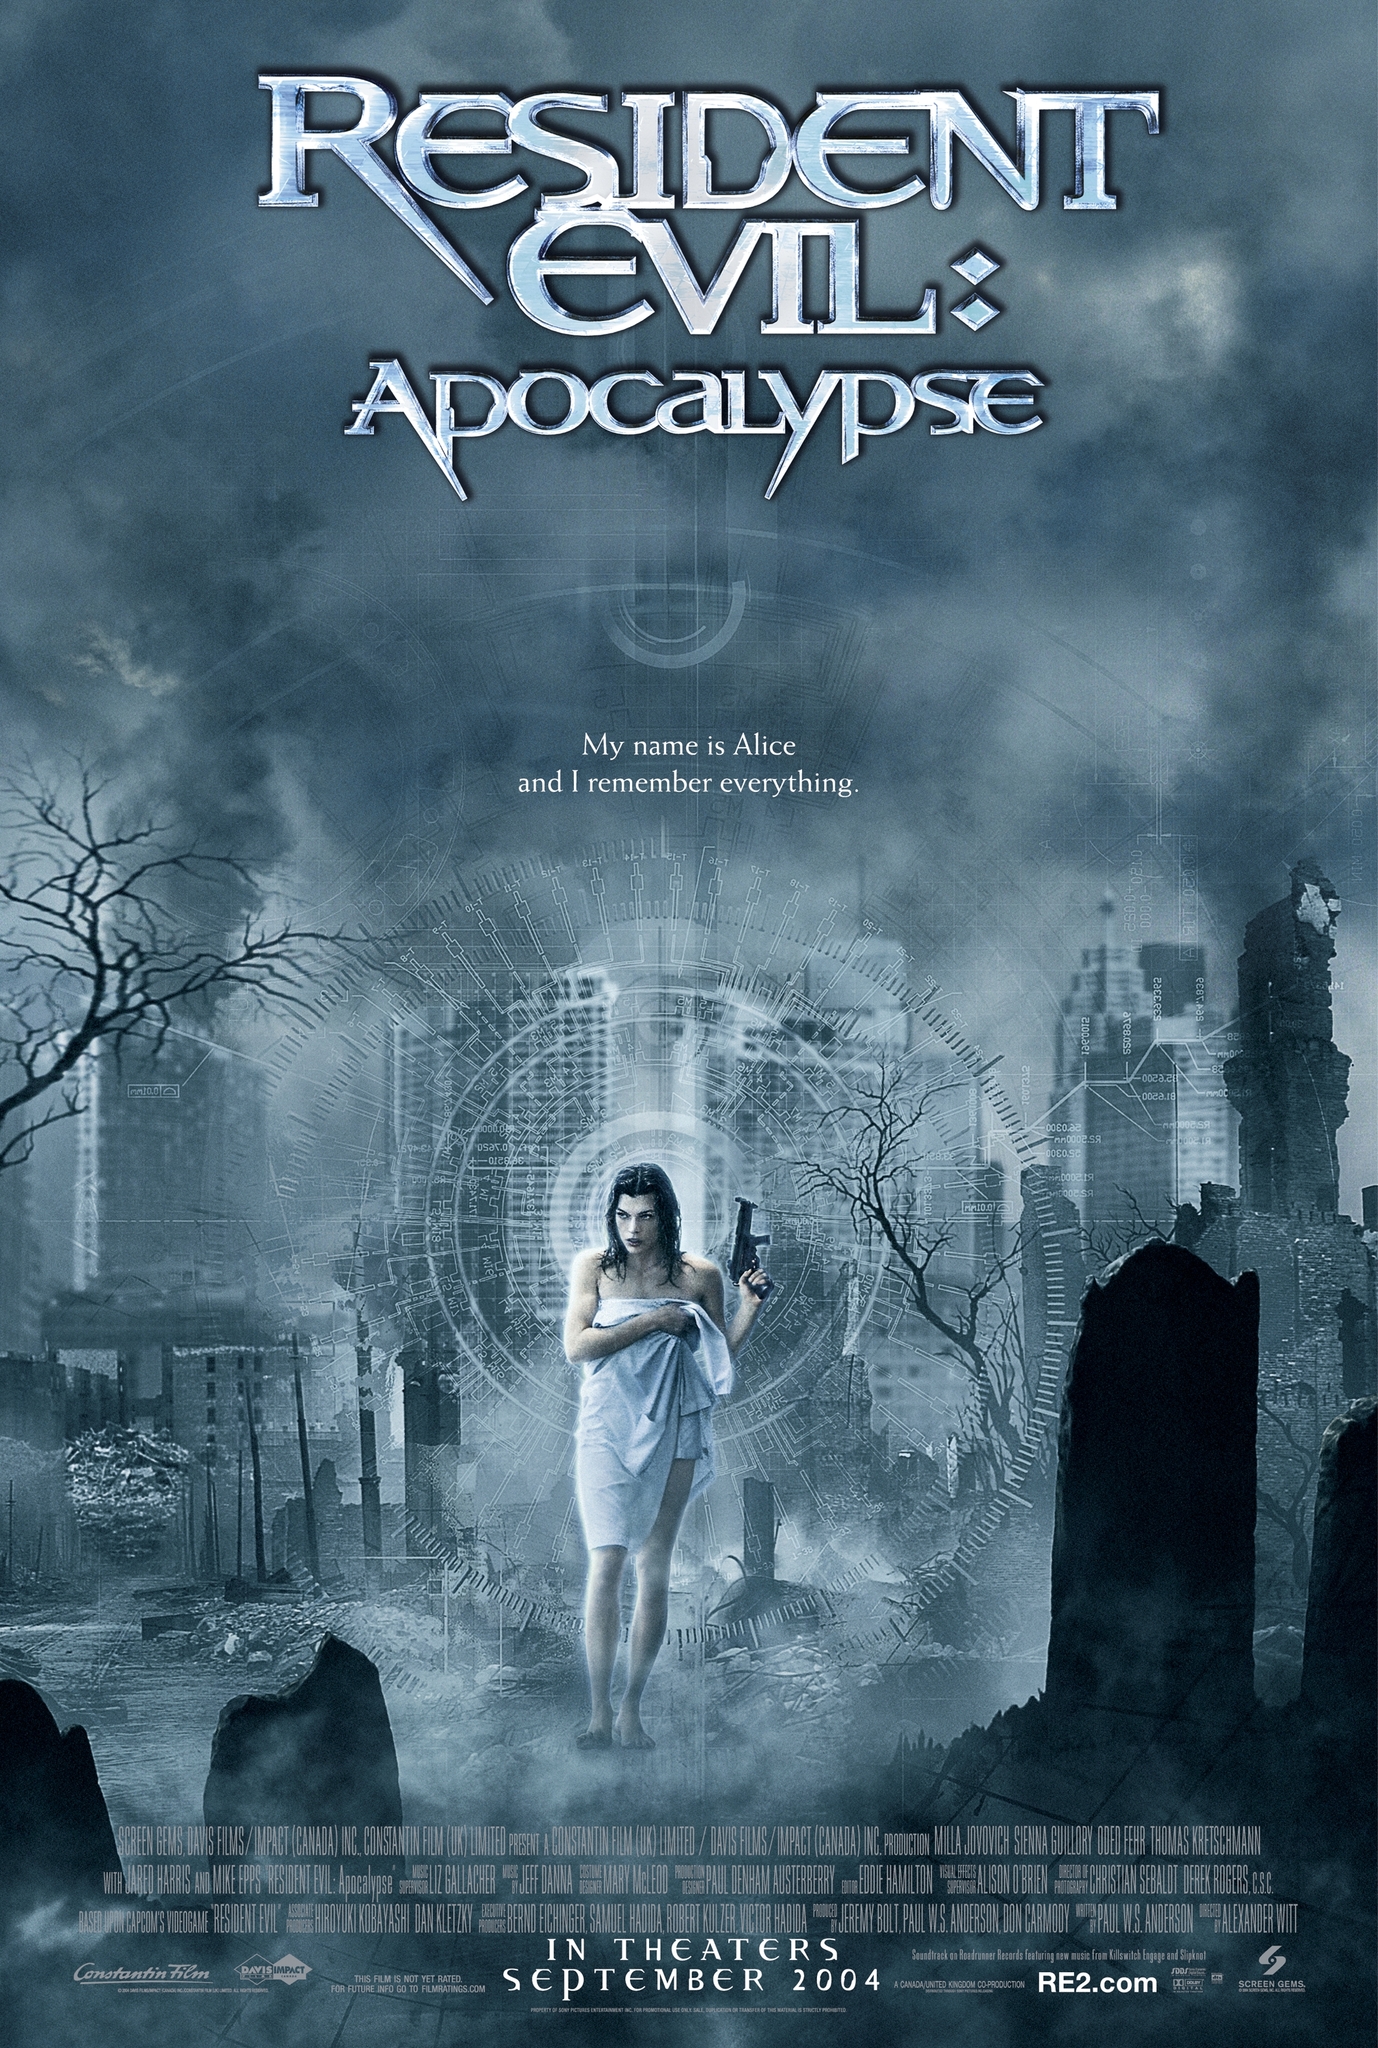 Resident evil 2: apocalypse 2004 4k quality